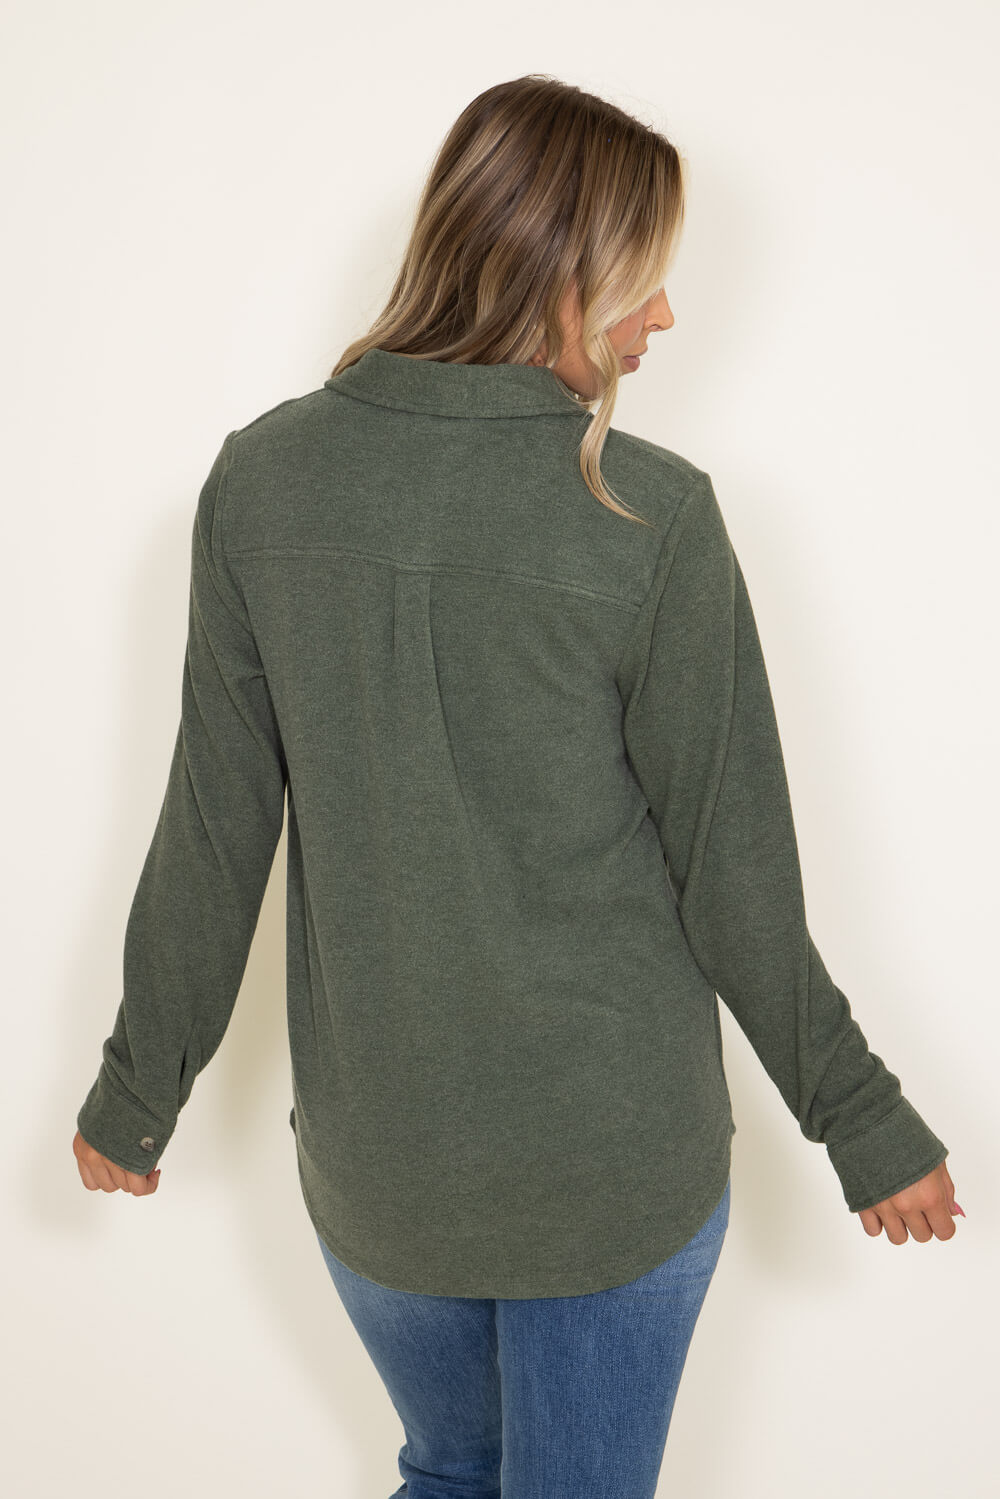 Thread & Supply Lewis Shirt for Women in Green | T1084PVXGK-FERN – Glik's